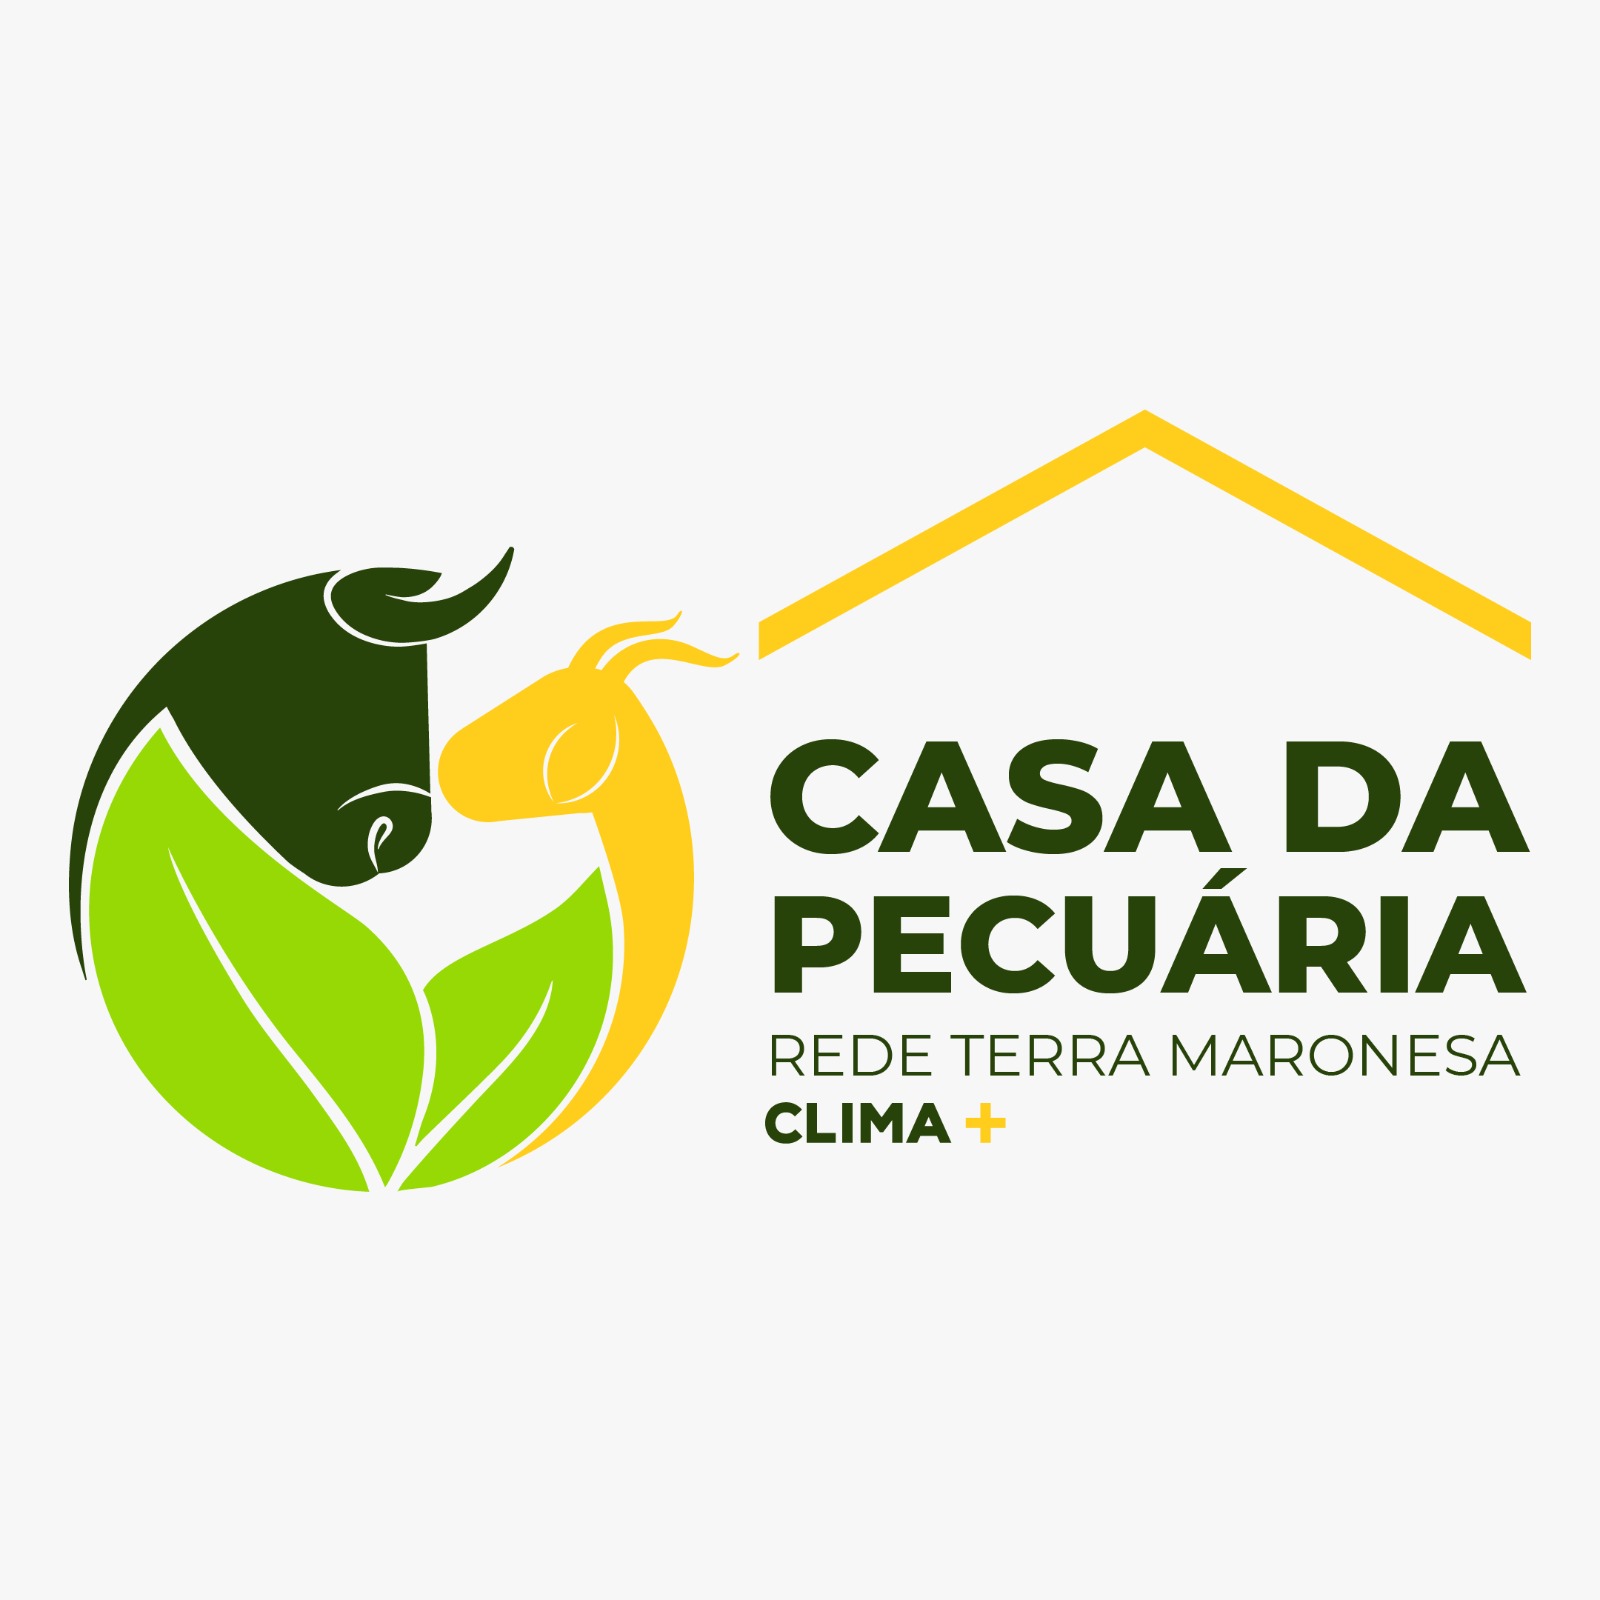 CasaPecuaria_logo1.jpg